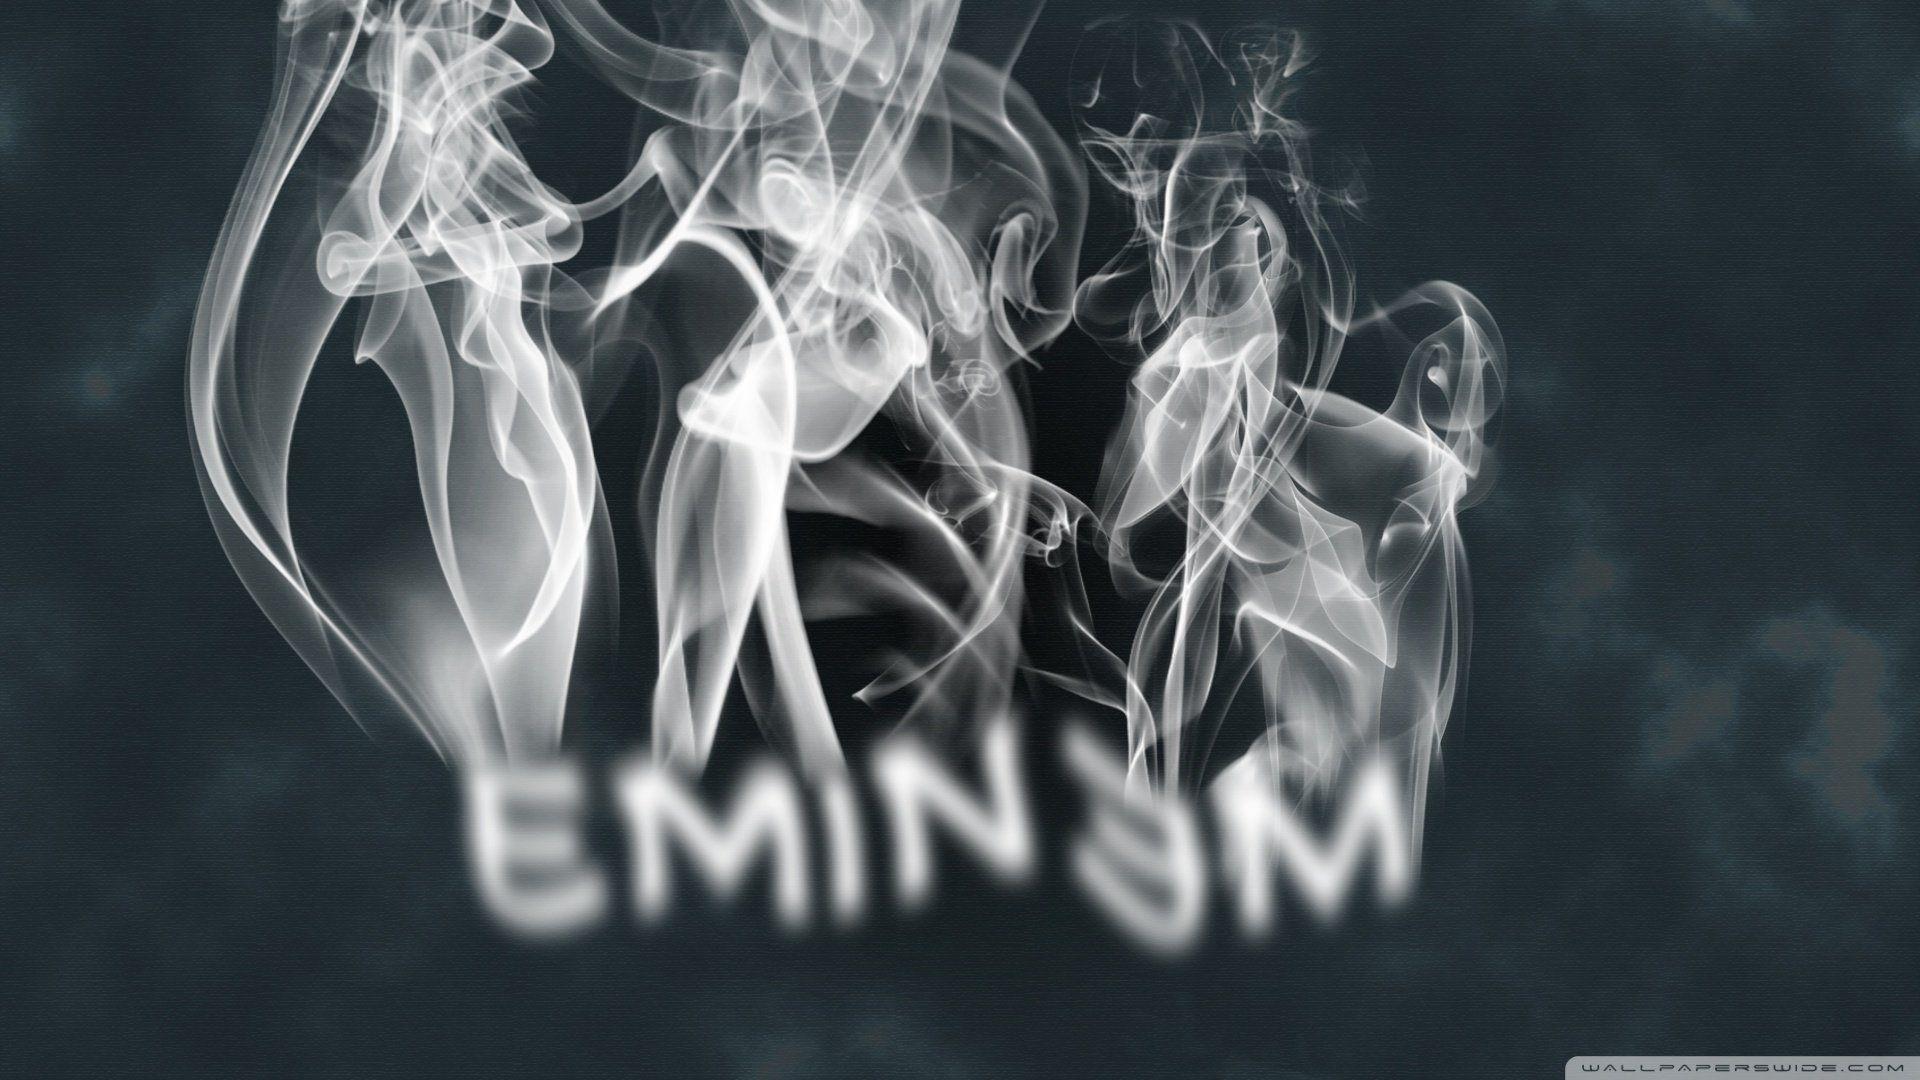 Eminem Rap God Wallpaper HD Resolution, Celebrities Wallpaper